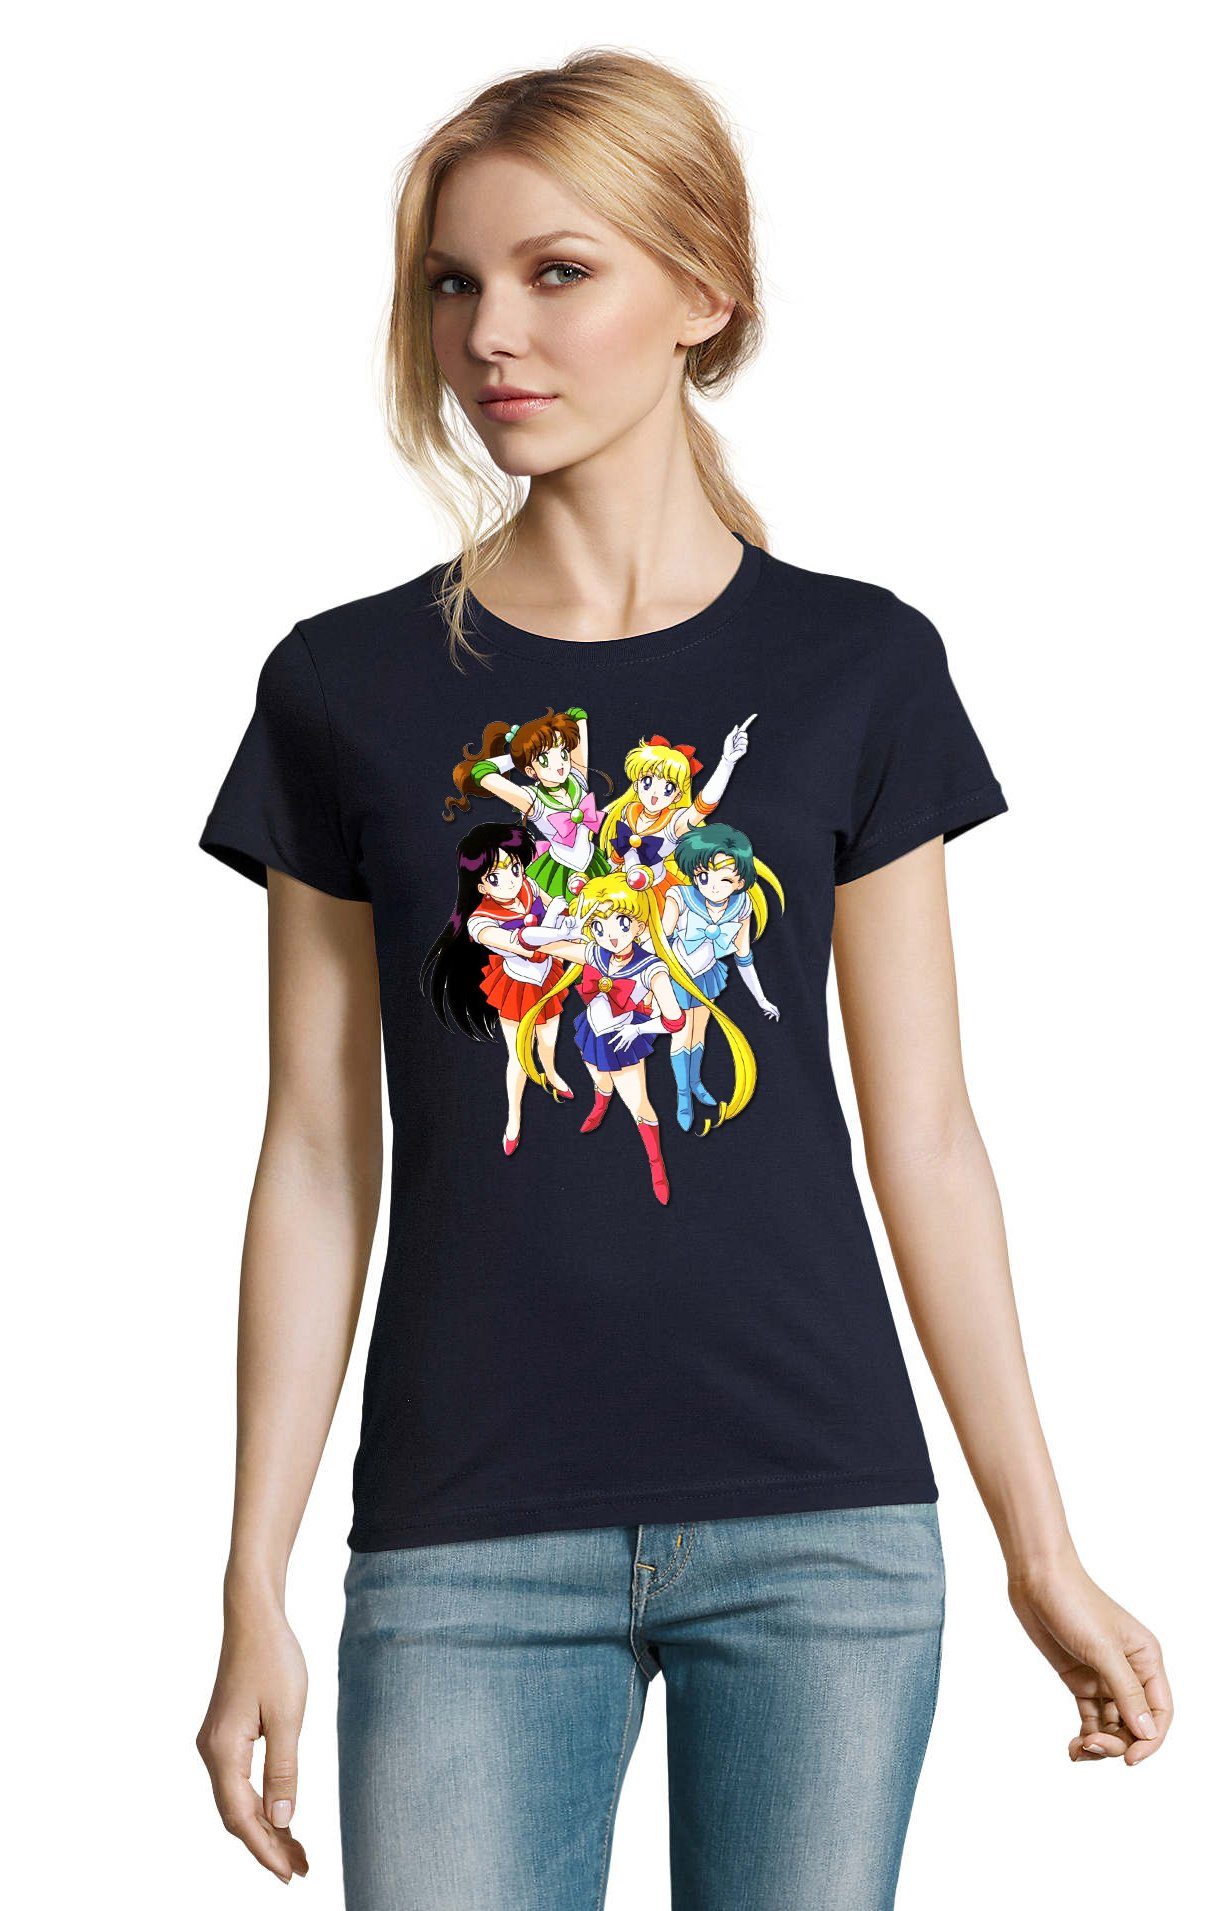 Blondie & Brownie T-Shirt Damen Fun Comic Sailor Moon and Friends Anime Manga Navyblau